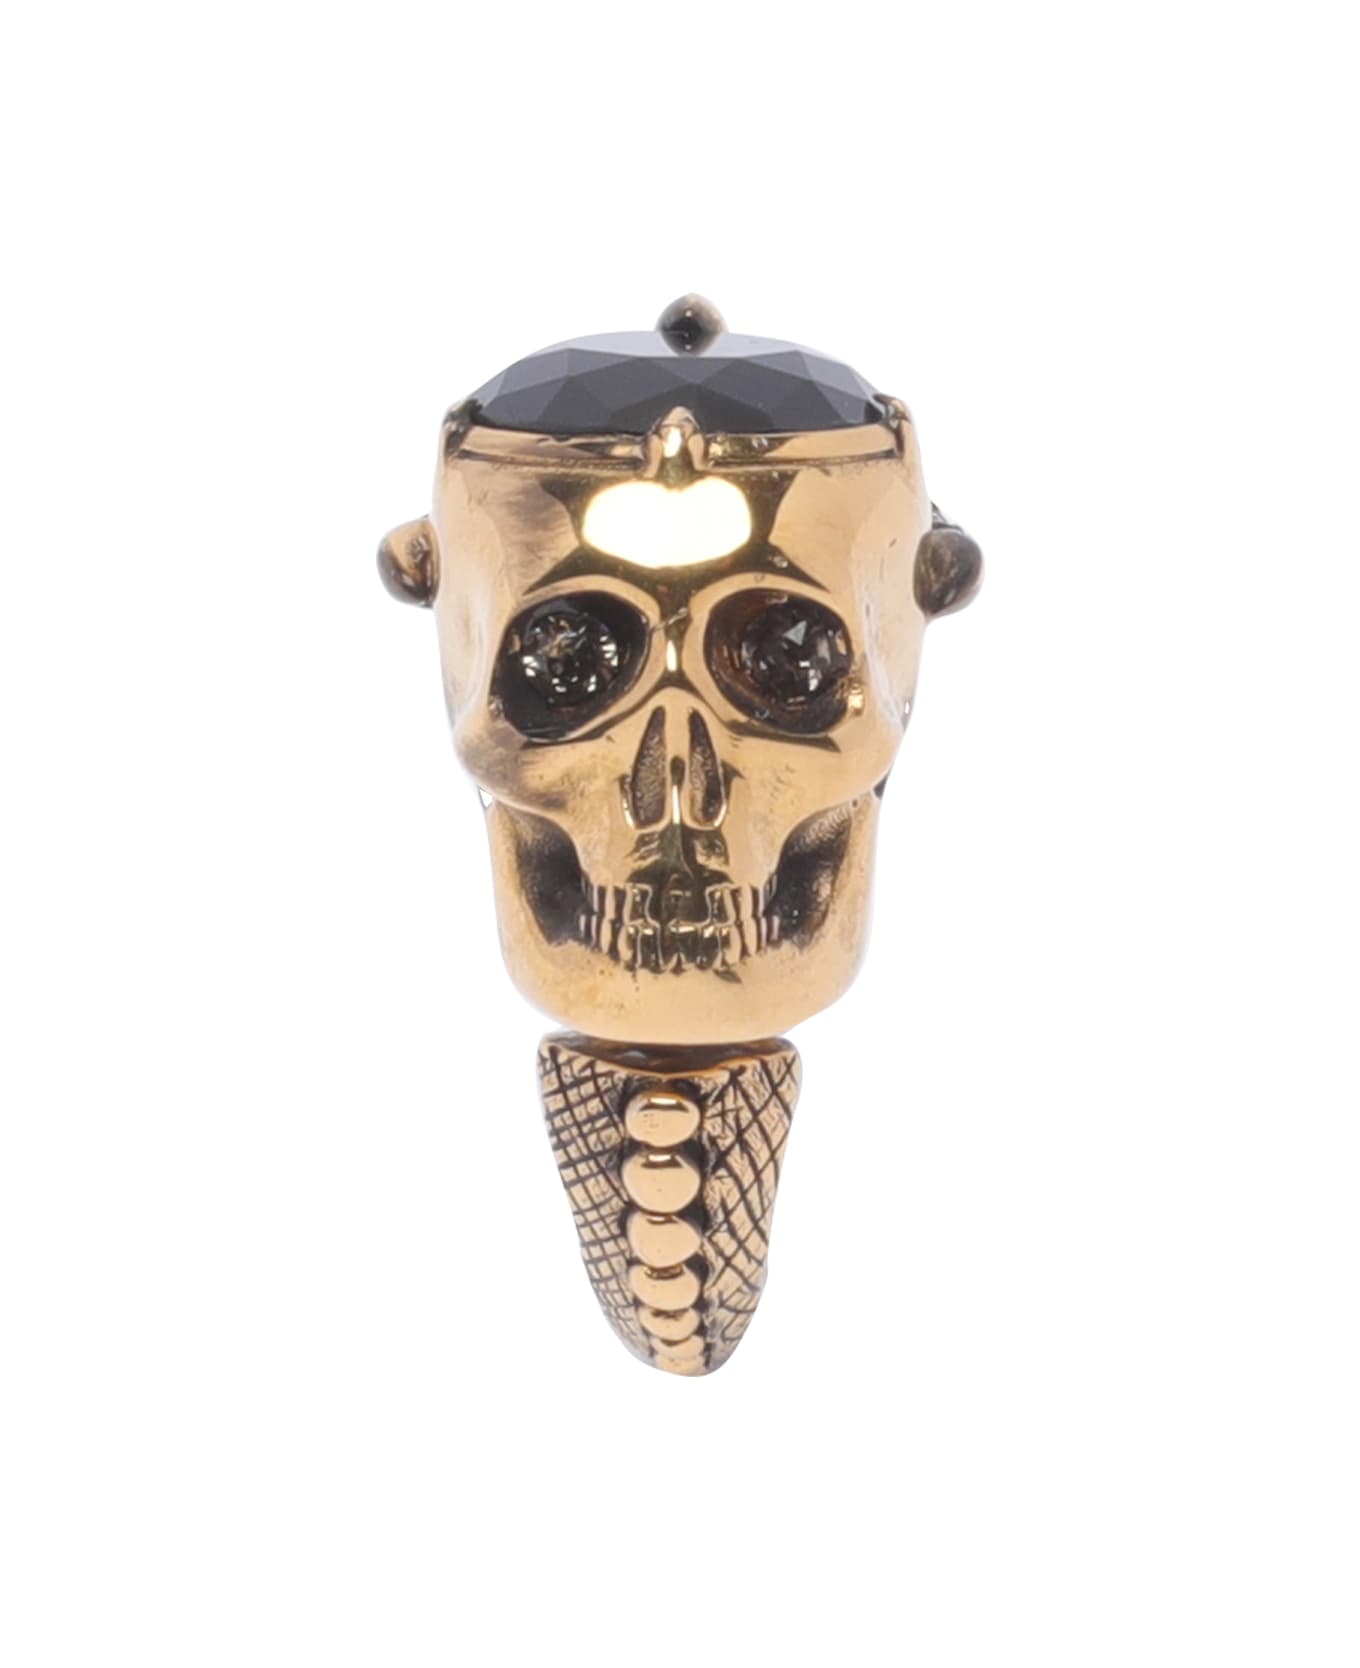 Alexander McQueen Skull Embellished Ring - Golden